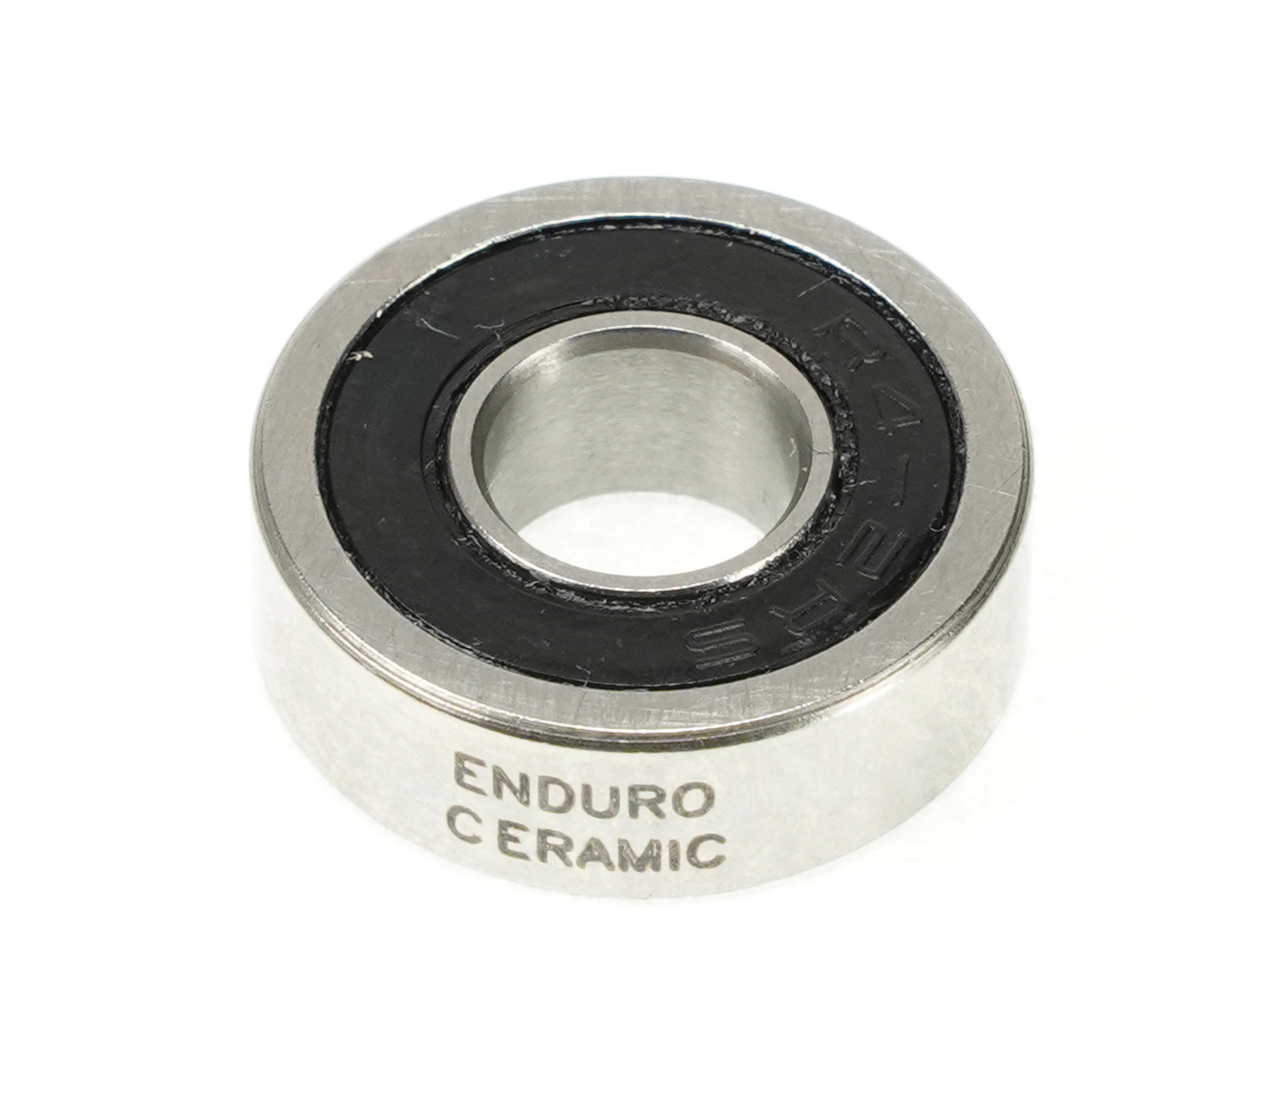 Enduro CH R 4 LLB - Ceramic-Hybrid, ABEC-5 Radial Bearing (C3 Clearance) - 1/4 x 5/8 x 0.196